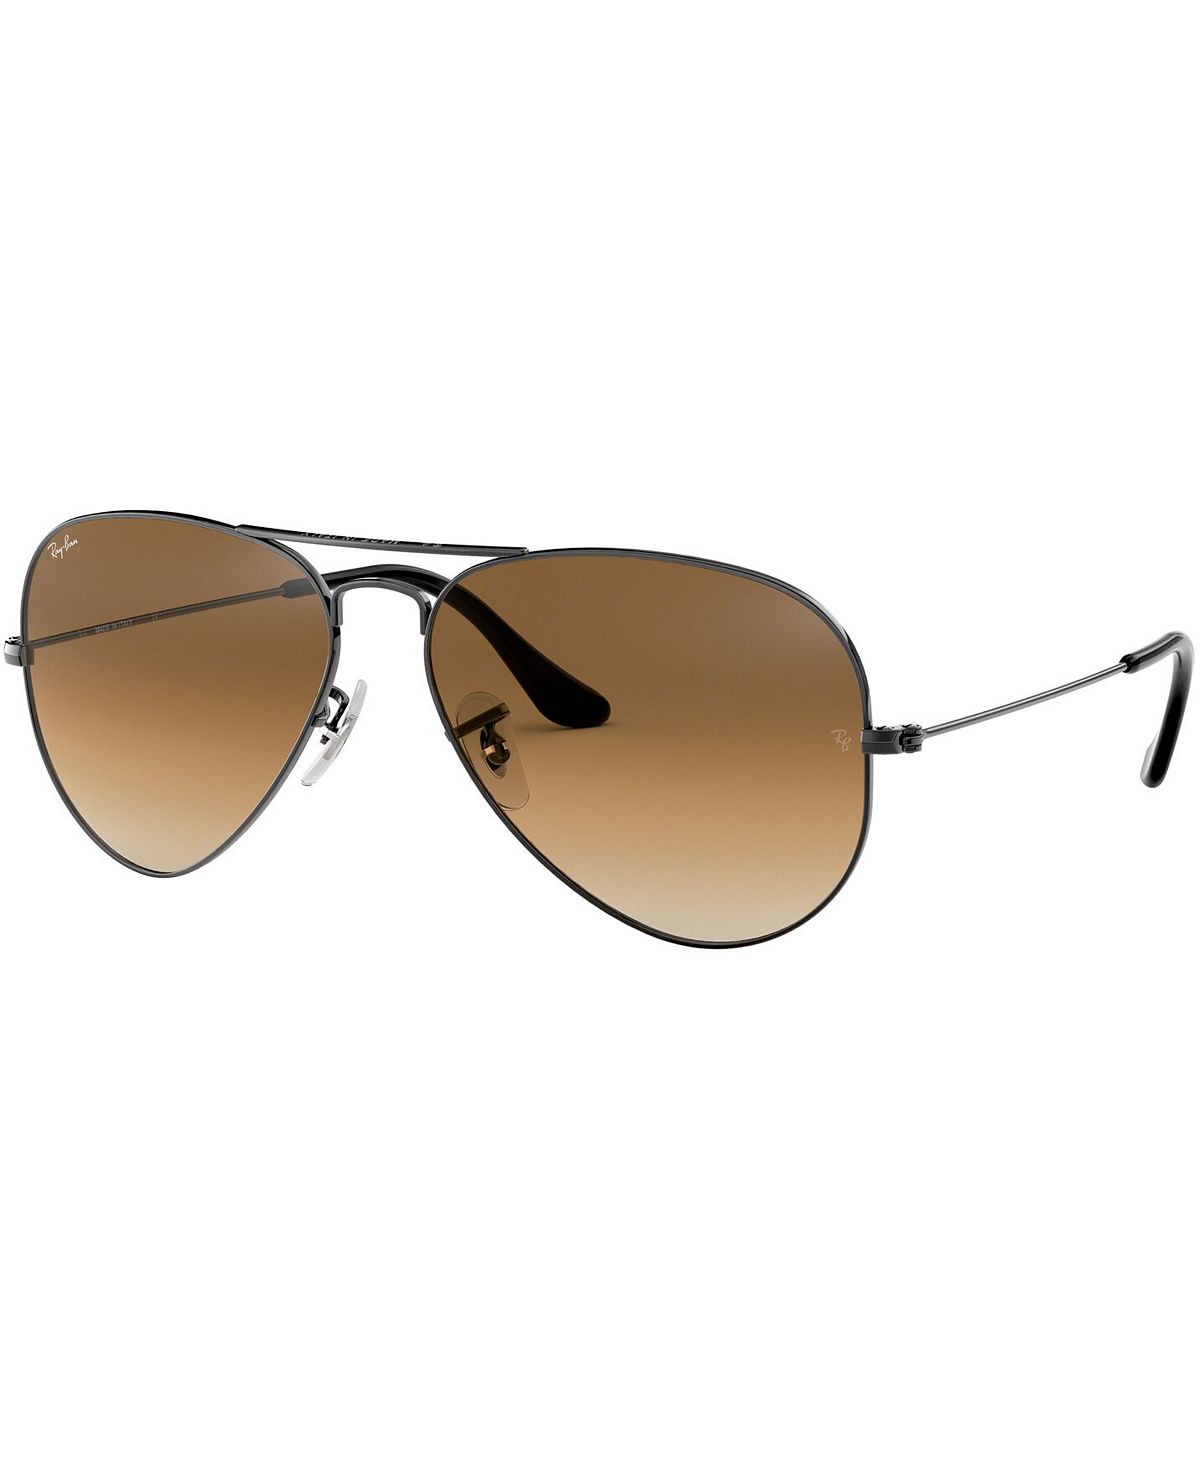 ray ban коричневый Солнцезащитные очки, rb3025 aviator gradient Ray-Ban, мульти